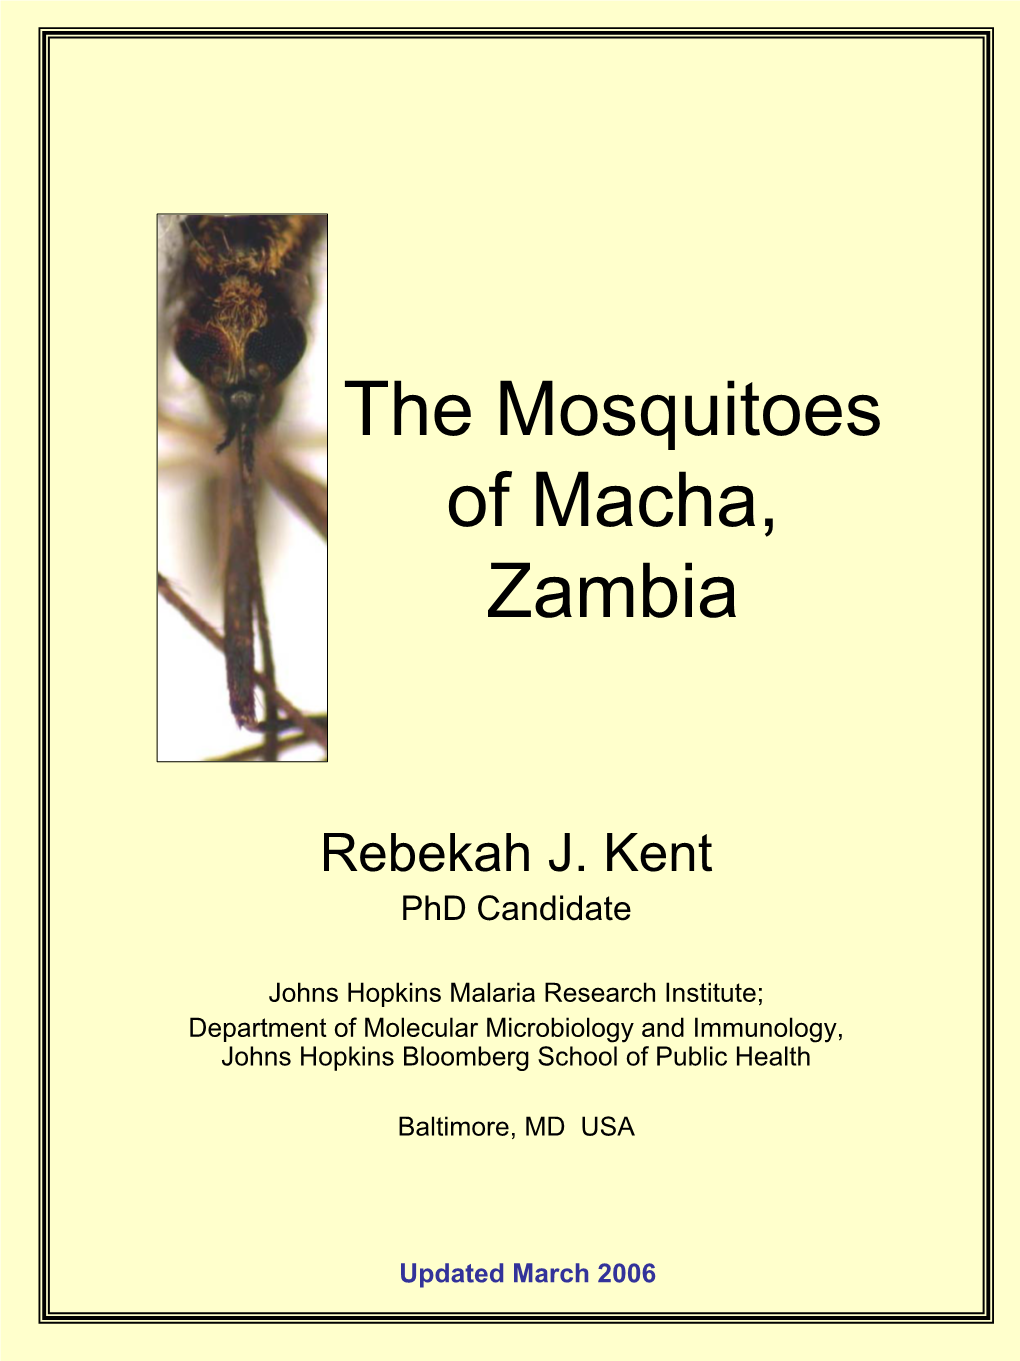 The Mosquitoes of Macha, Zambia